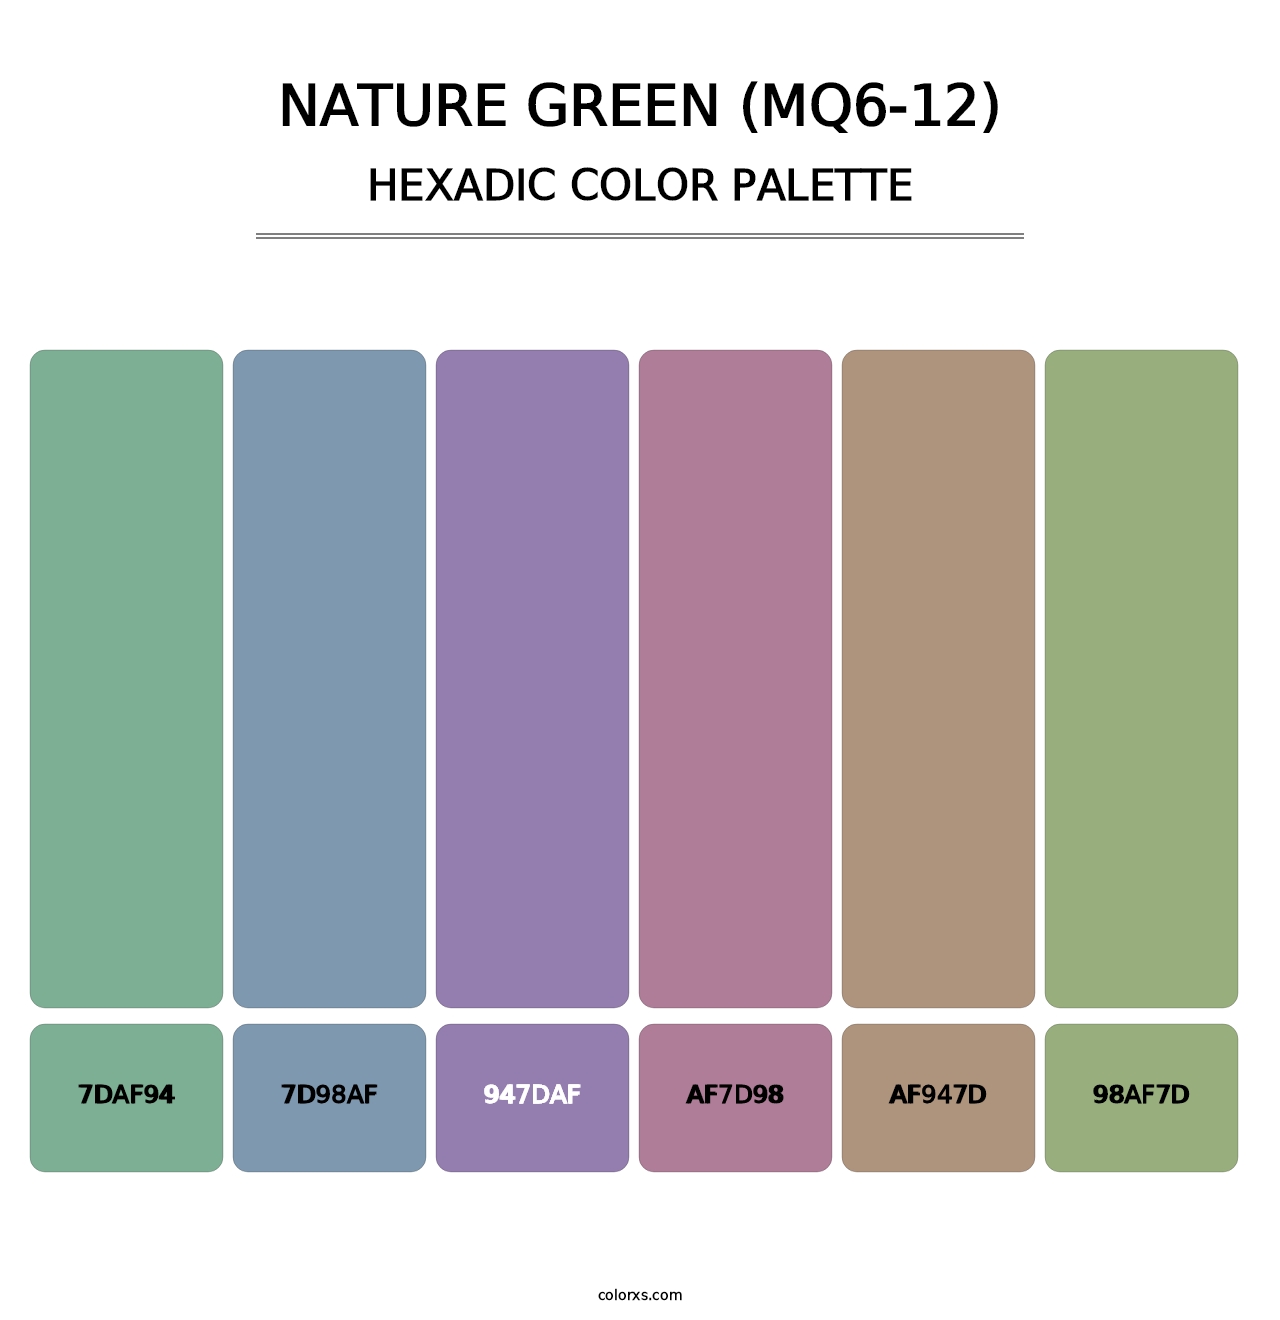 Nature Green (MQ6-12) - Hexadic Color Palette